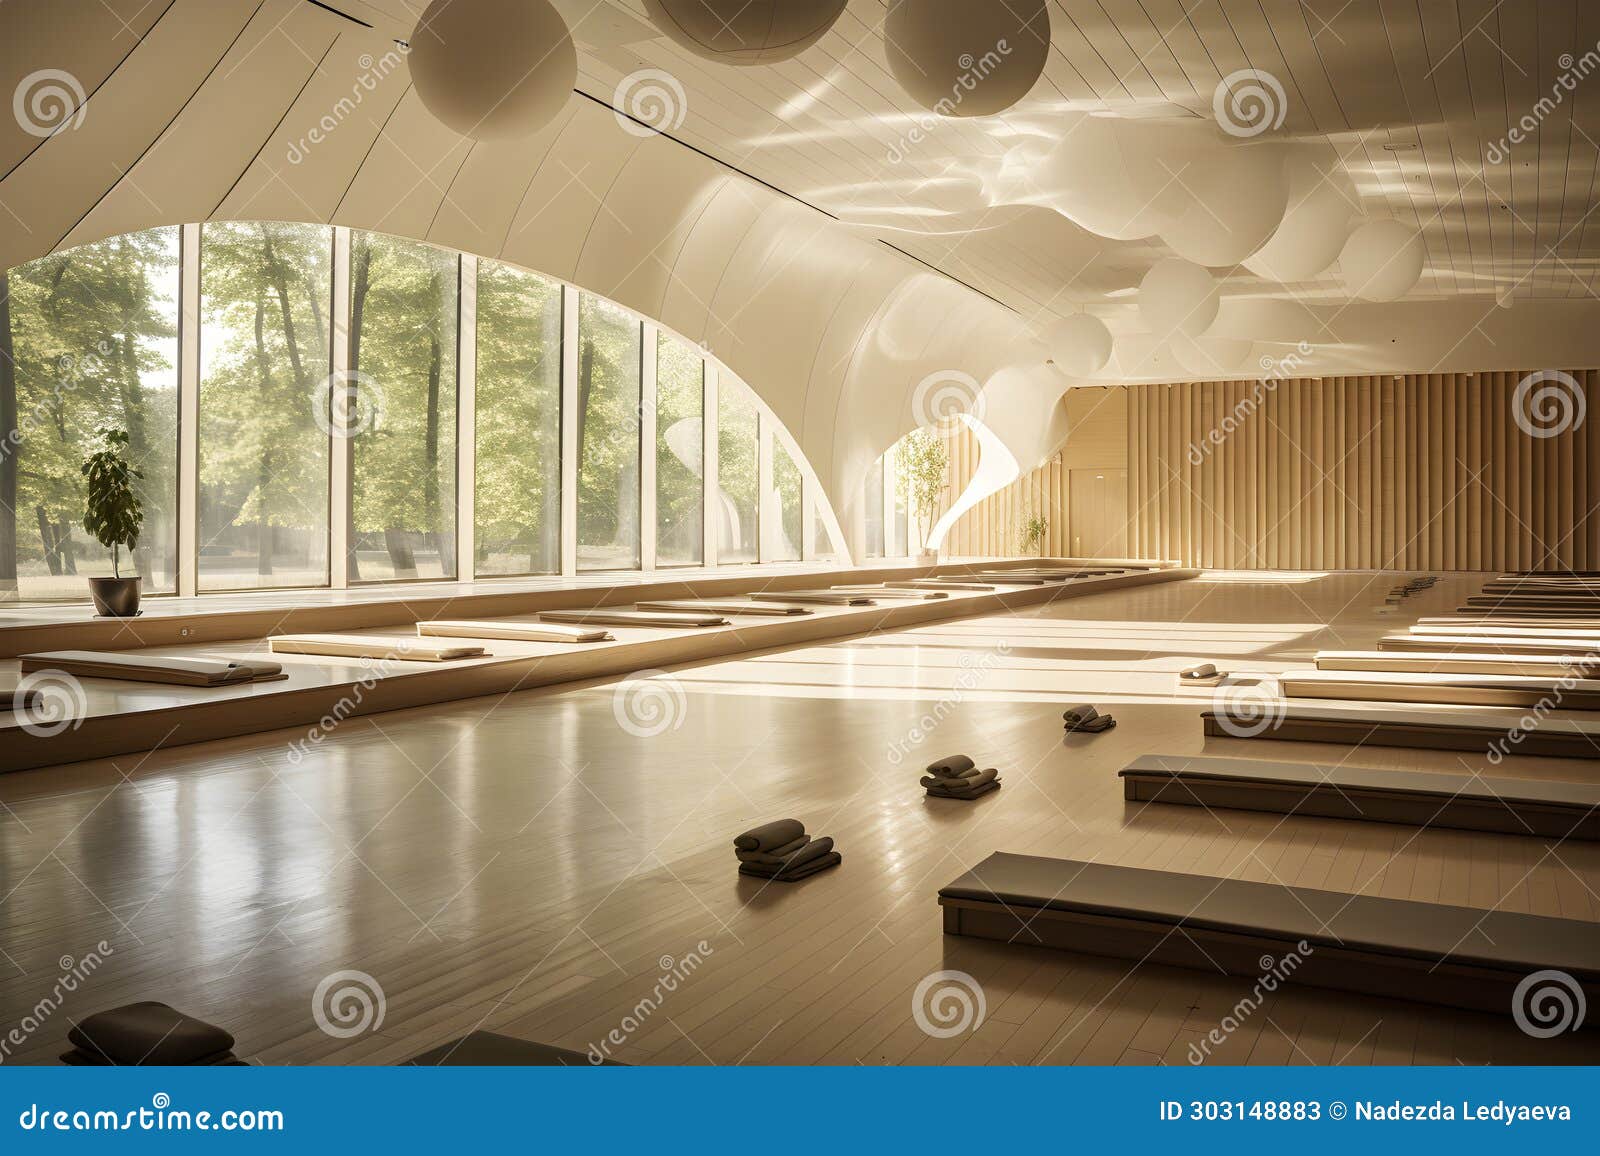 Gym White Interior with Black Yoga Mat, Big Windows, No People. Copy Space.  Stock Illustration - Illustration of meditating, cozy: 303148883